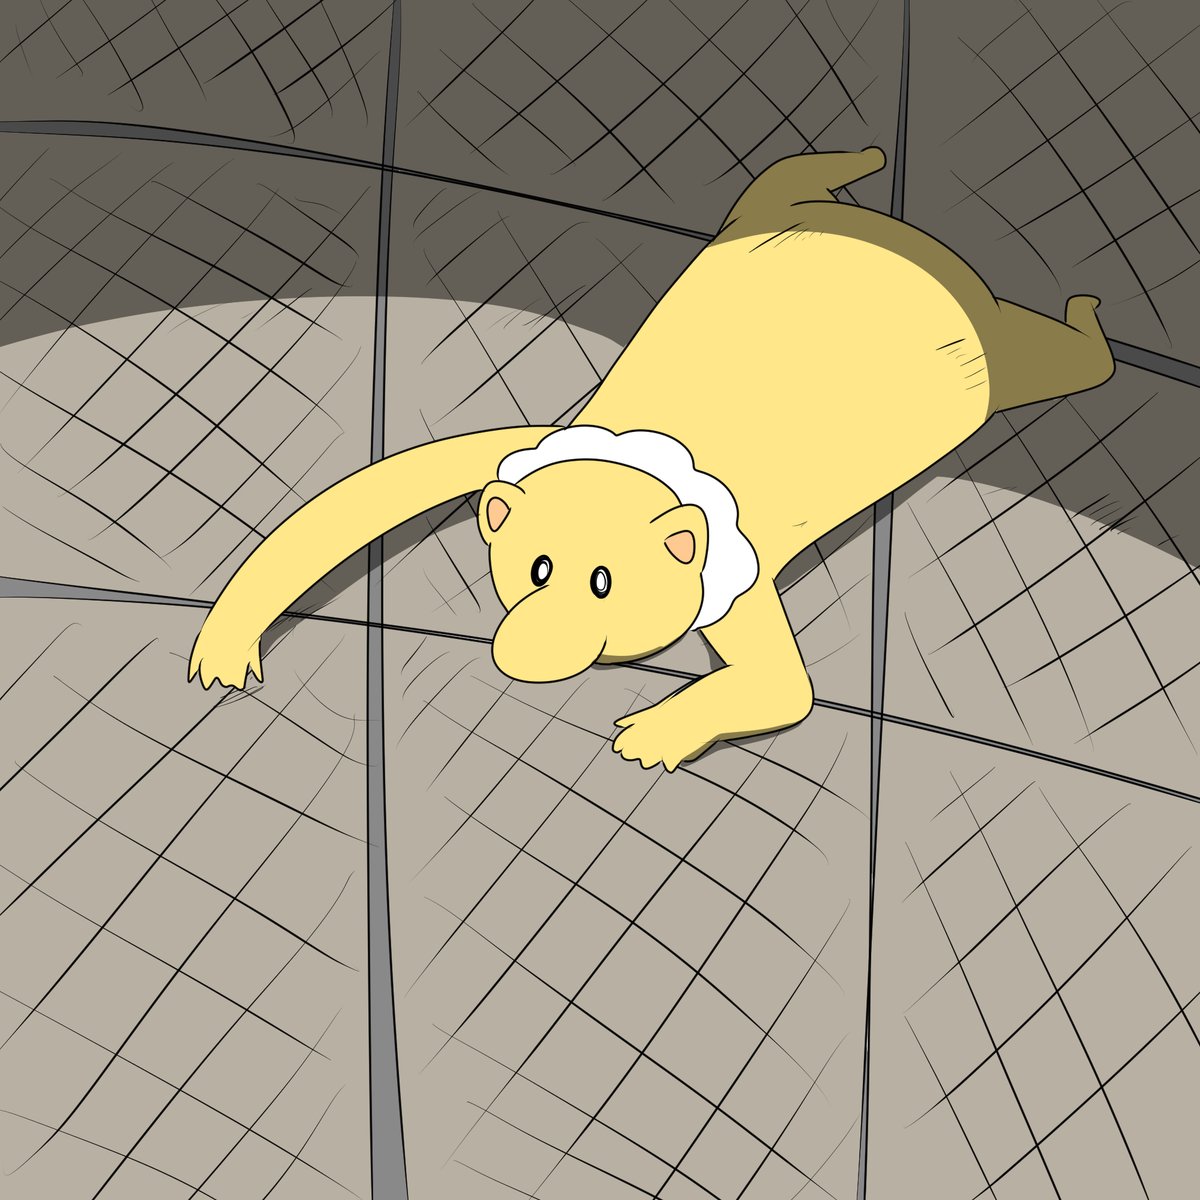 no humans tile floor tiles solo meme lying animal focus  illustration images